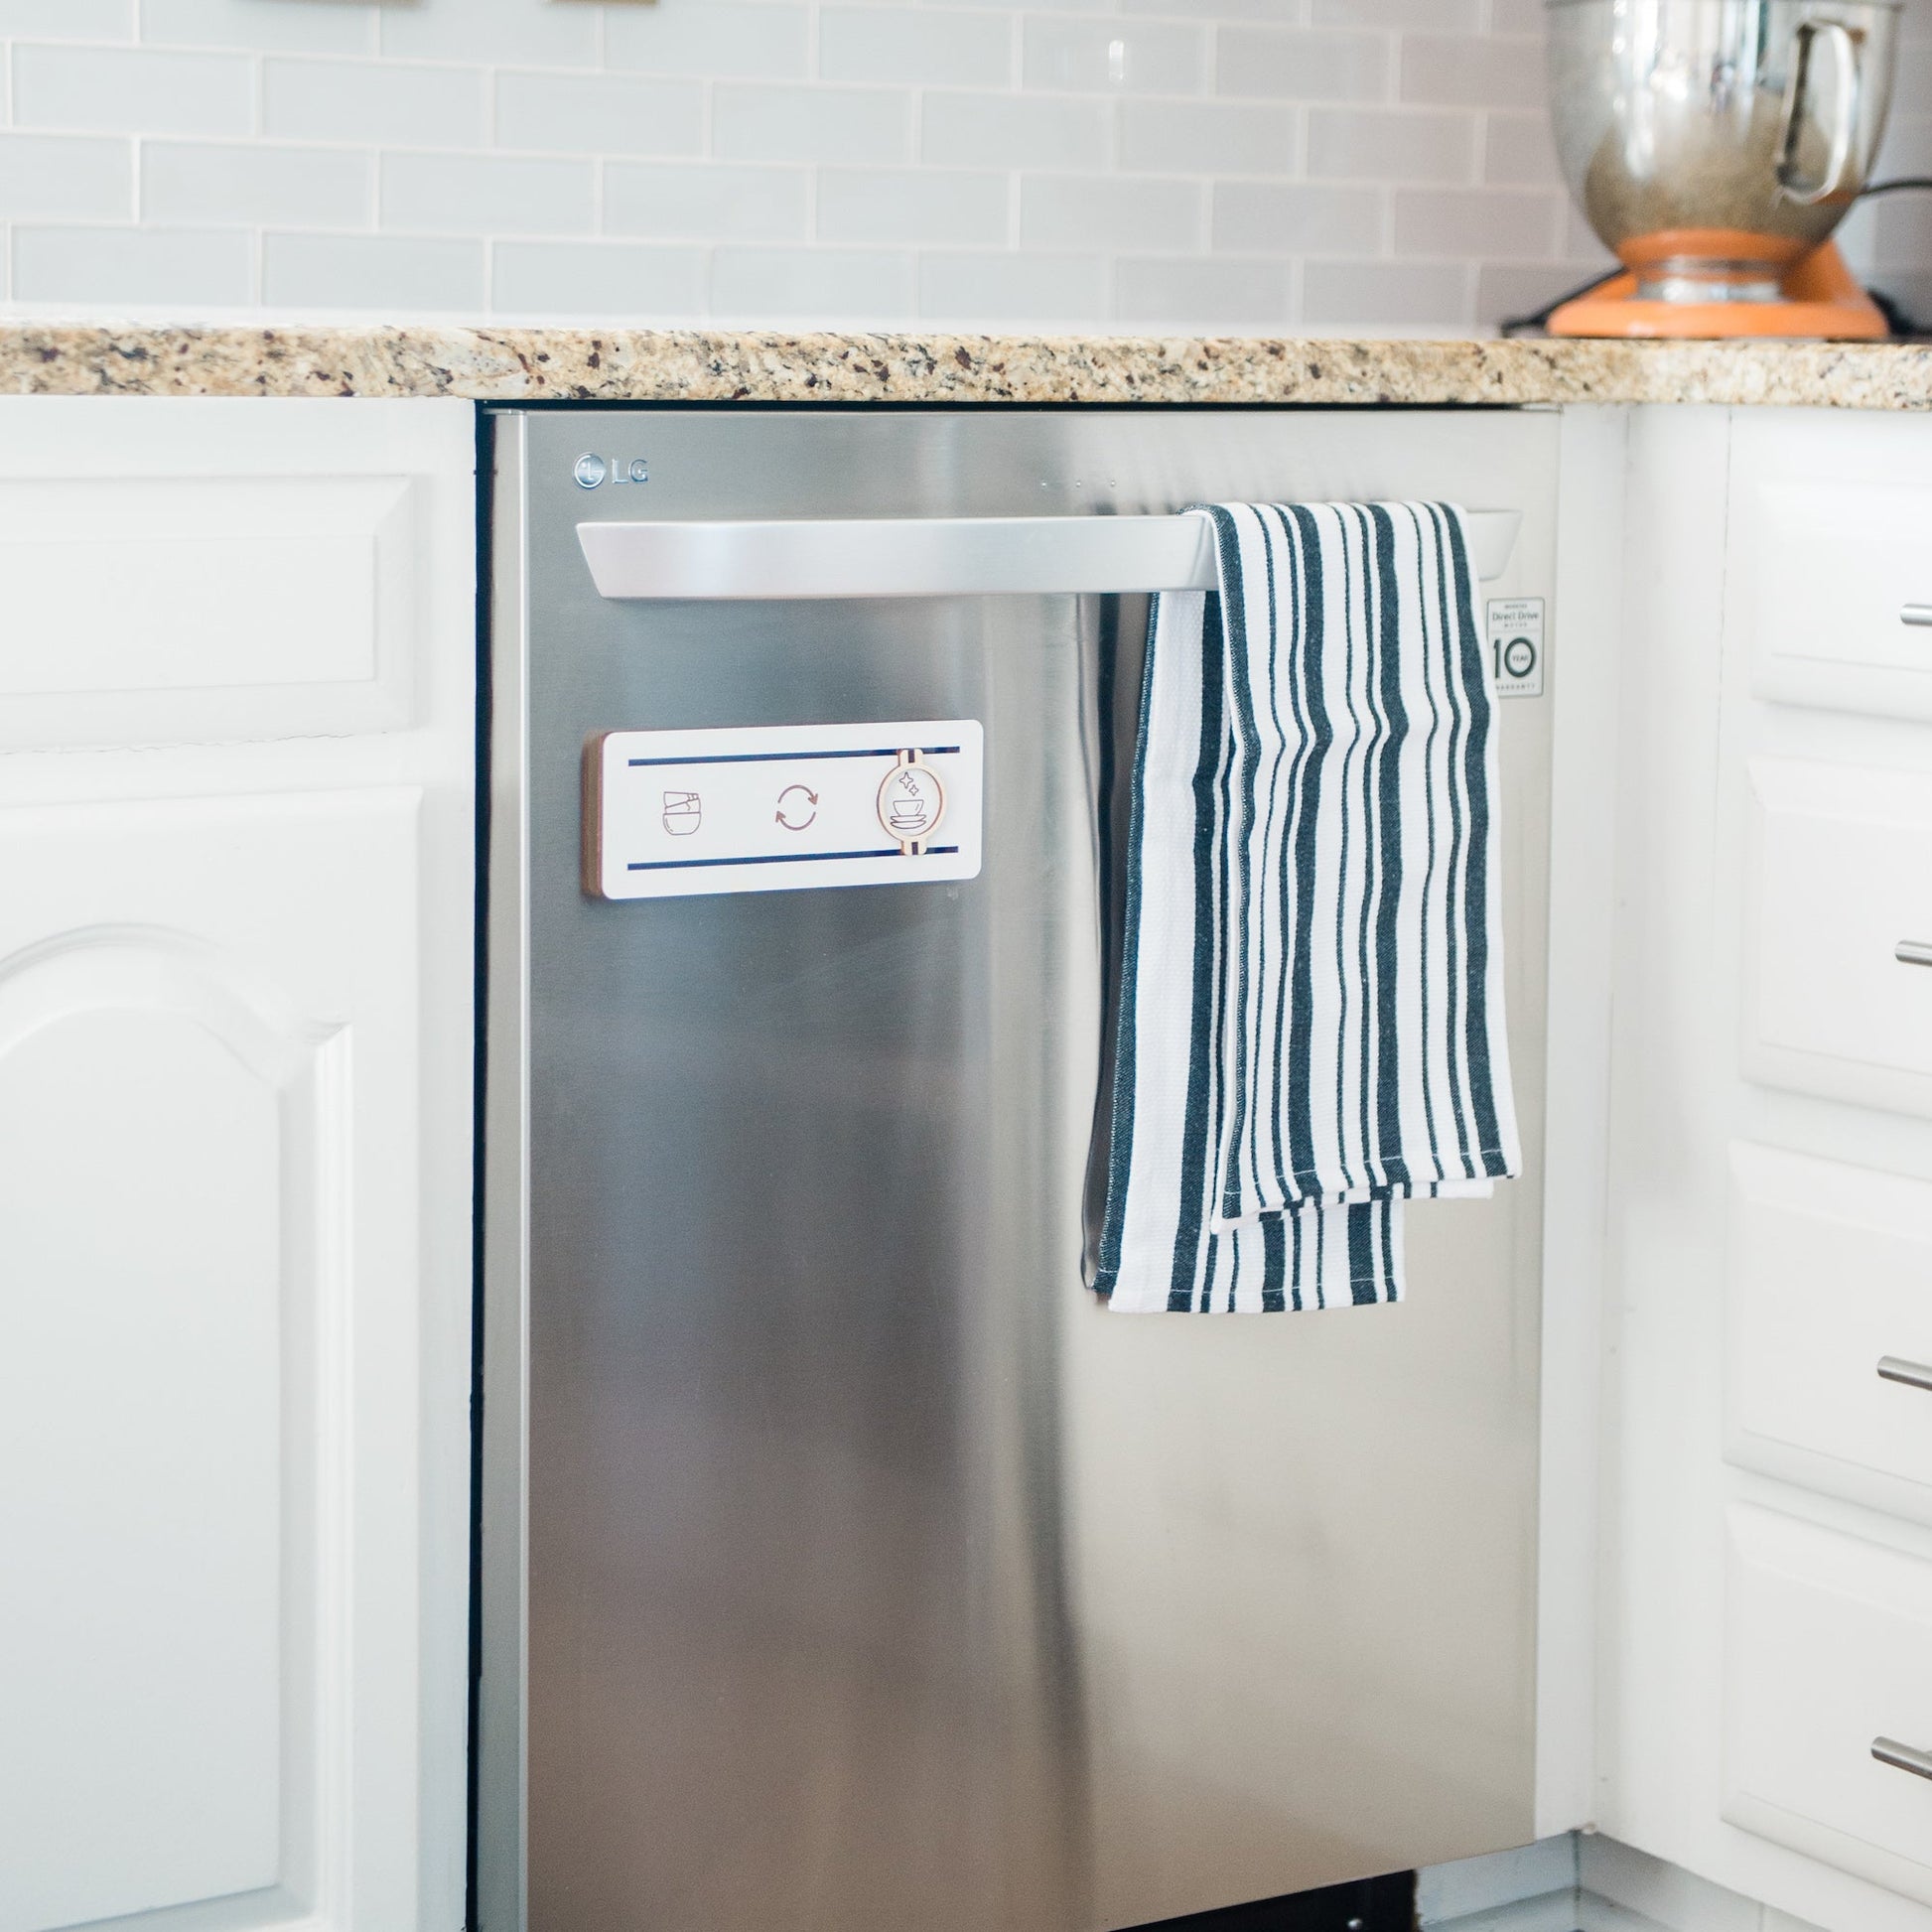 CONMOTO Clean Dirty Magnet for Dishwasher,Kitchen Dishwasher